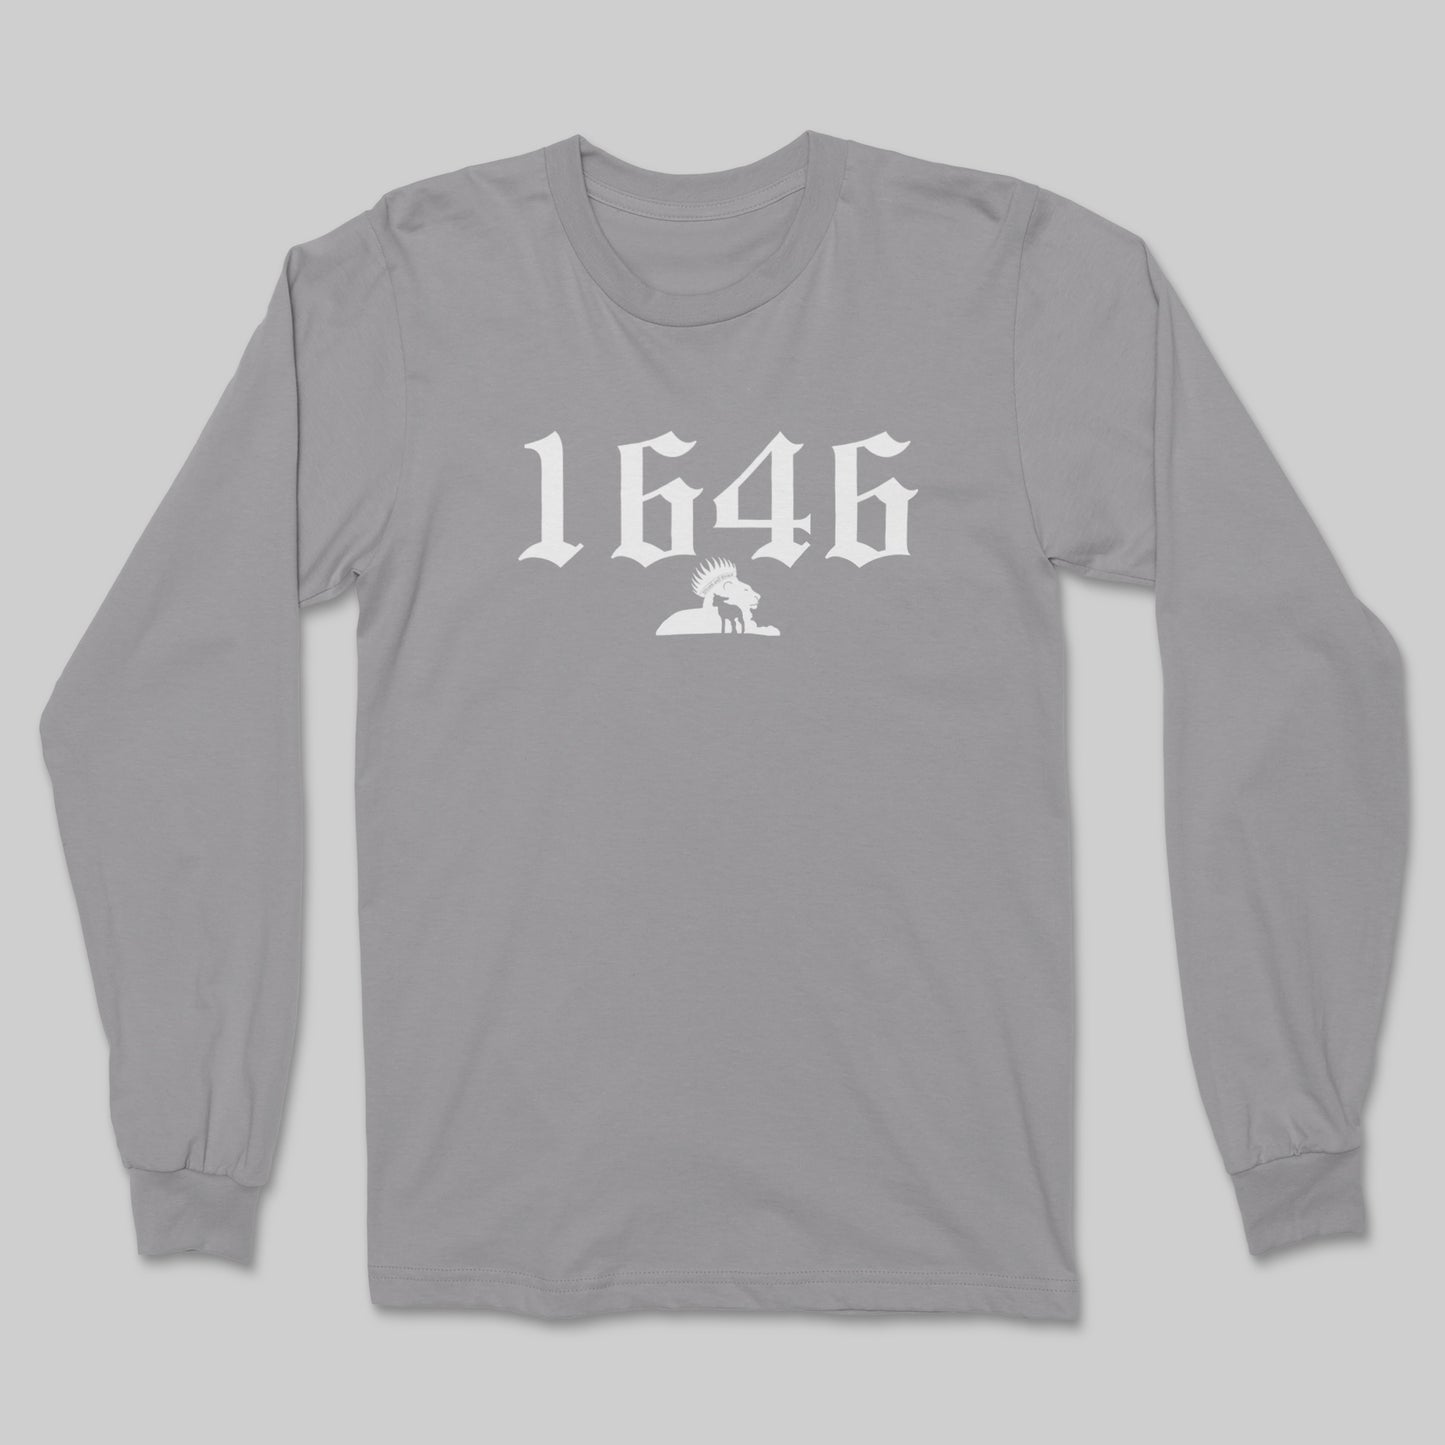 1646 - Long Sleeve